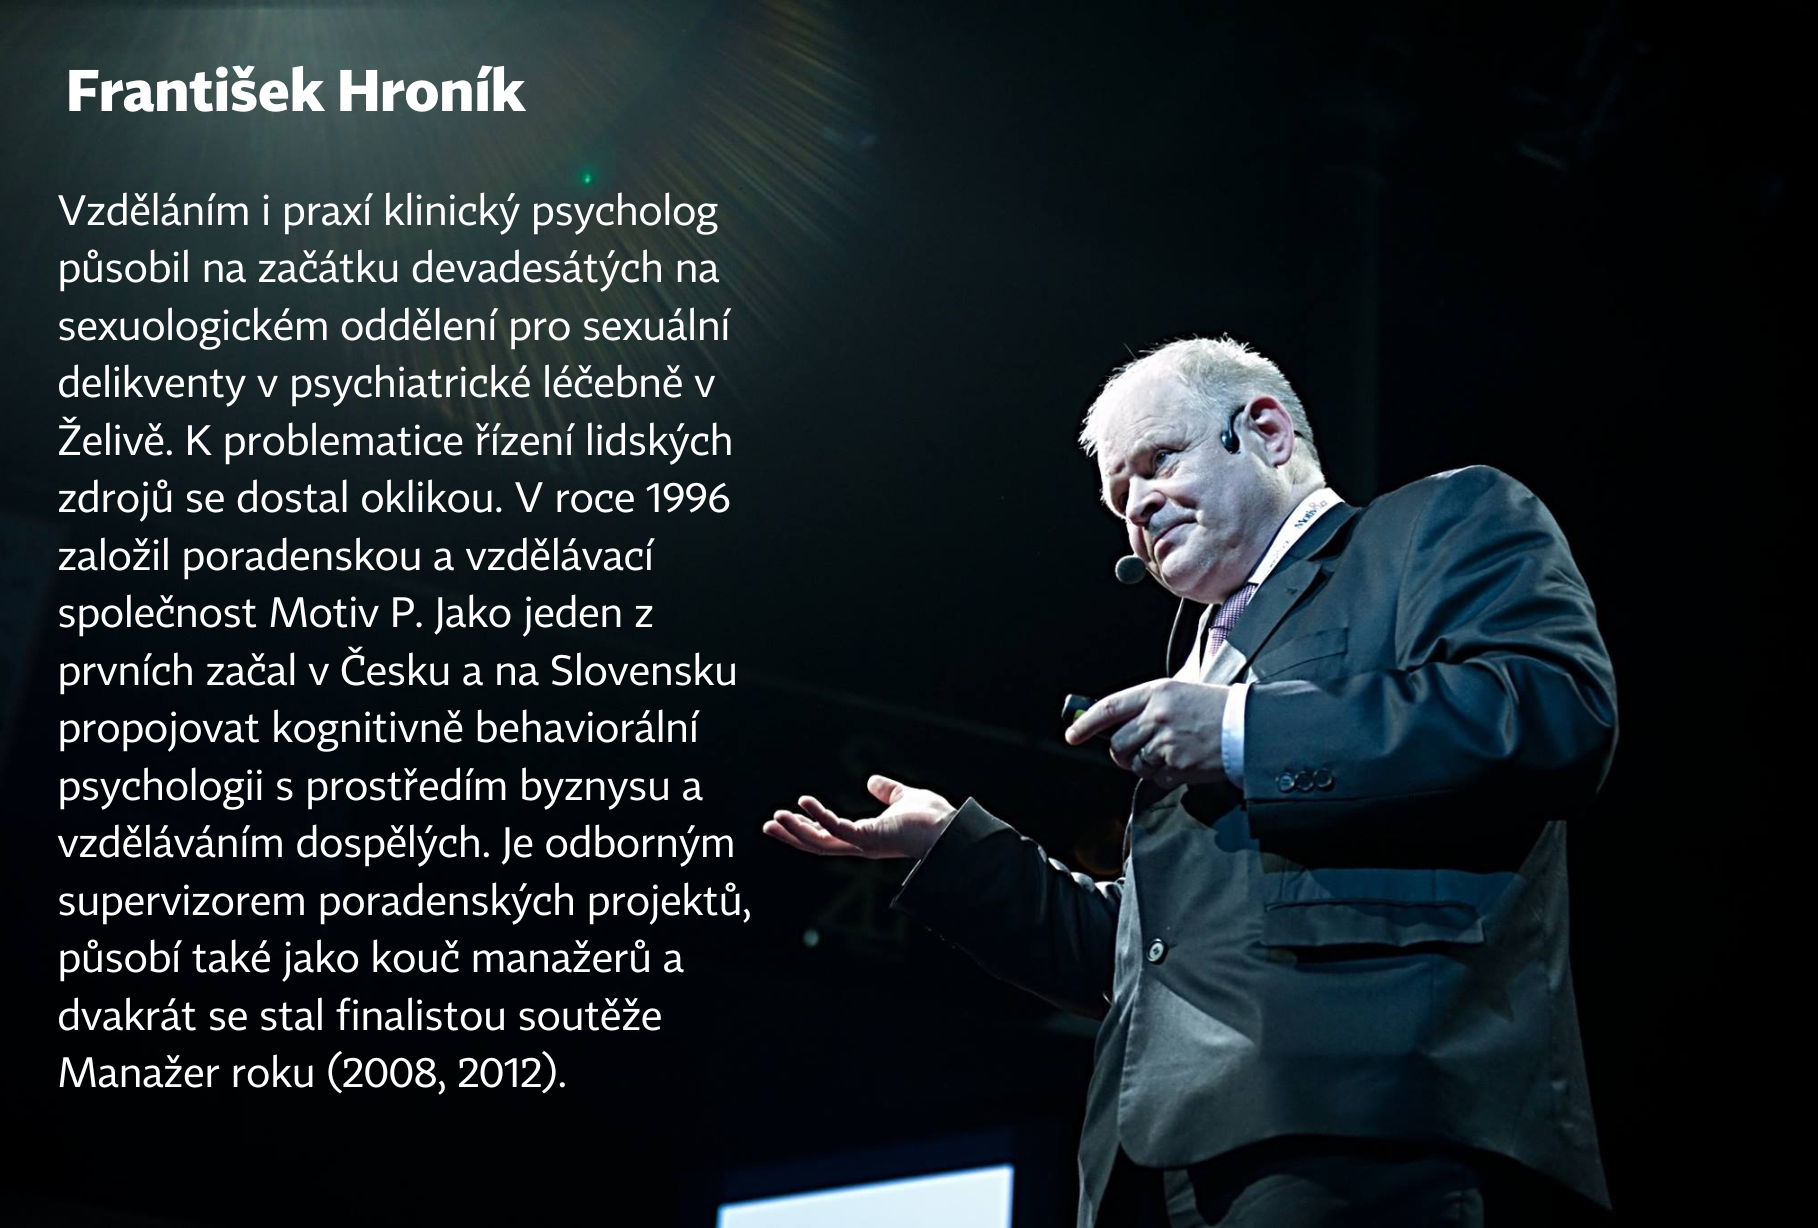 František Hroník. Zdroj fotografie: https://www.facebook.com/hronikfrantisek